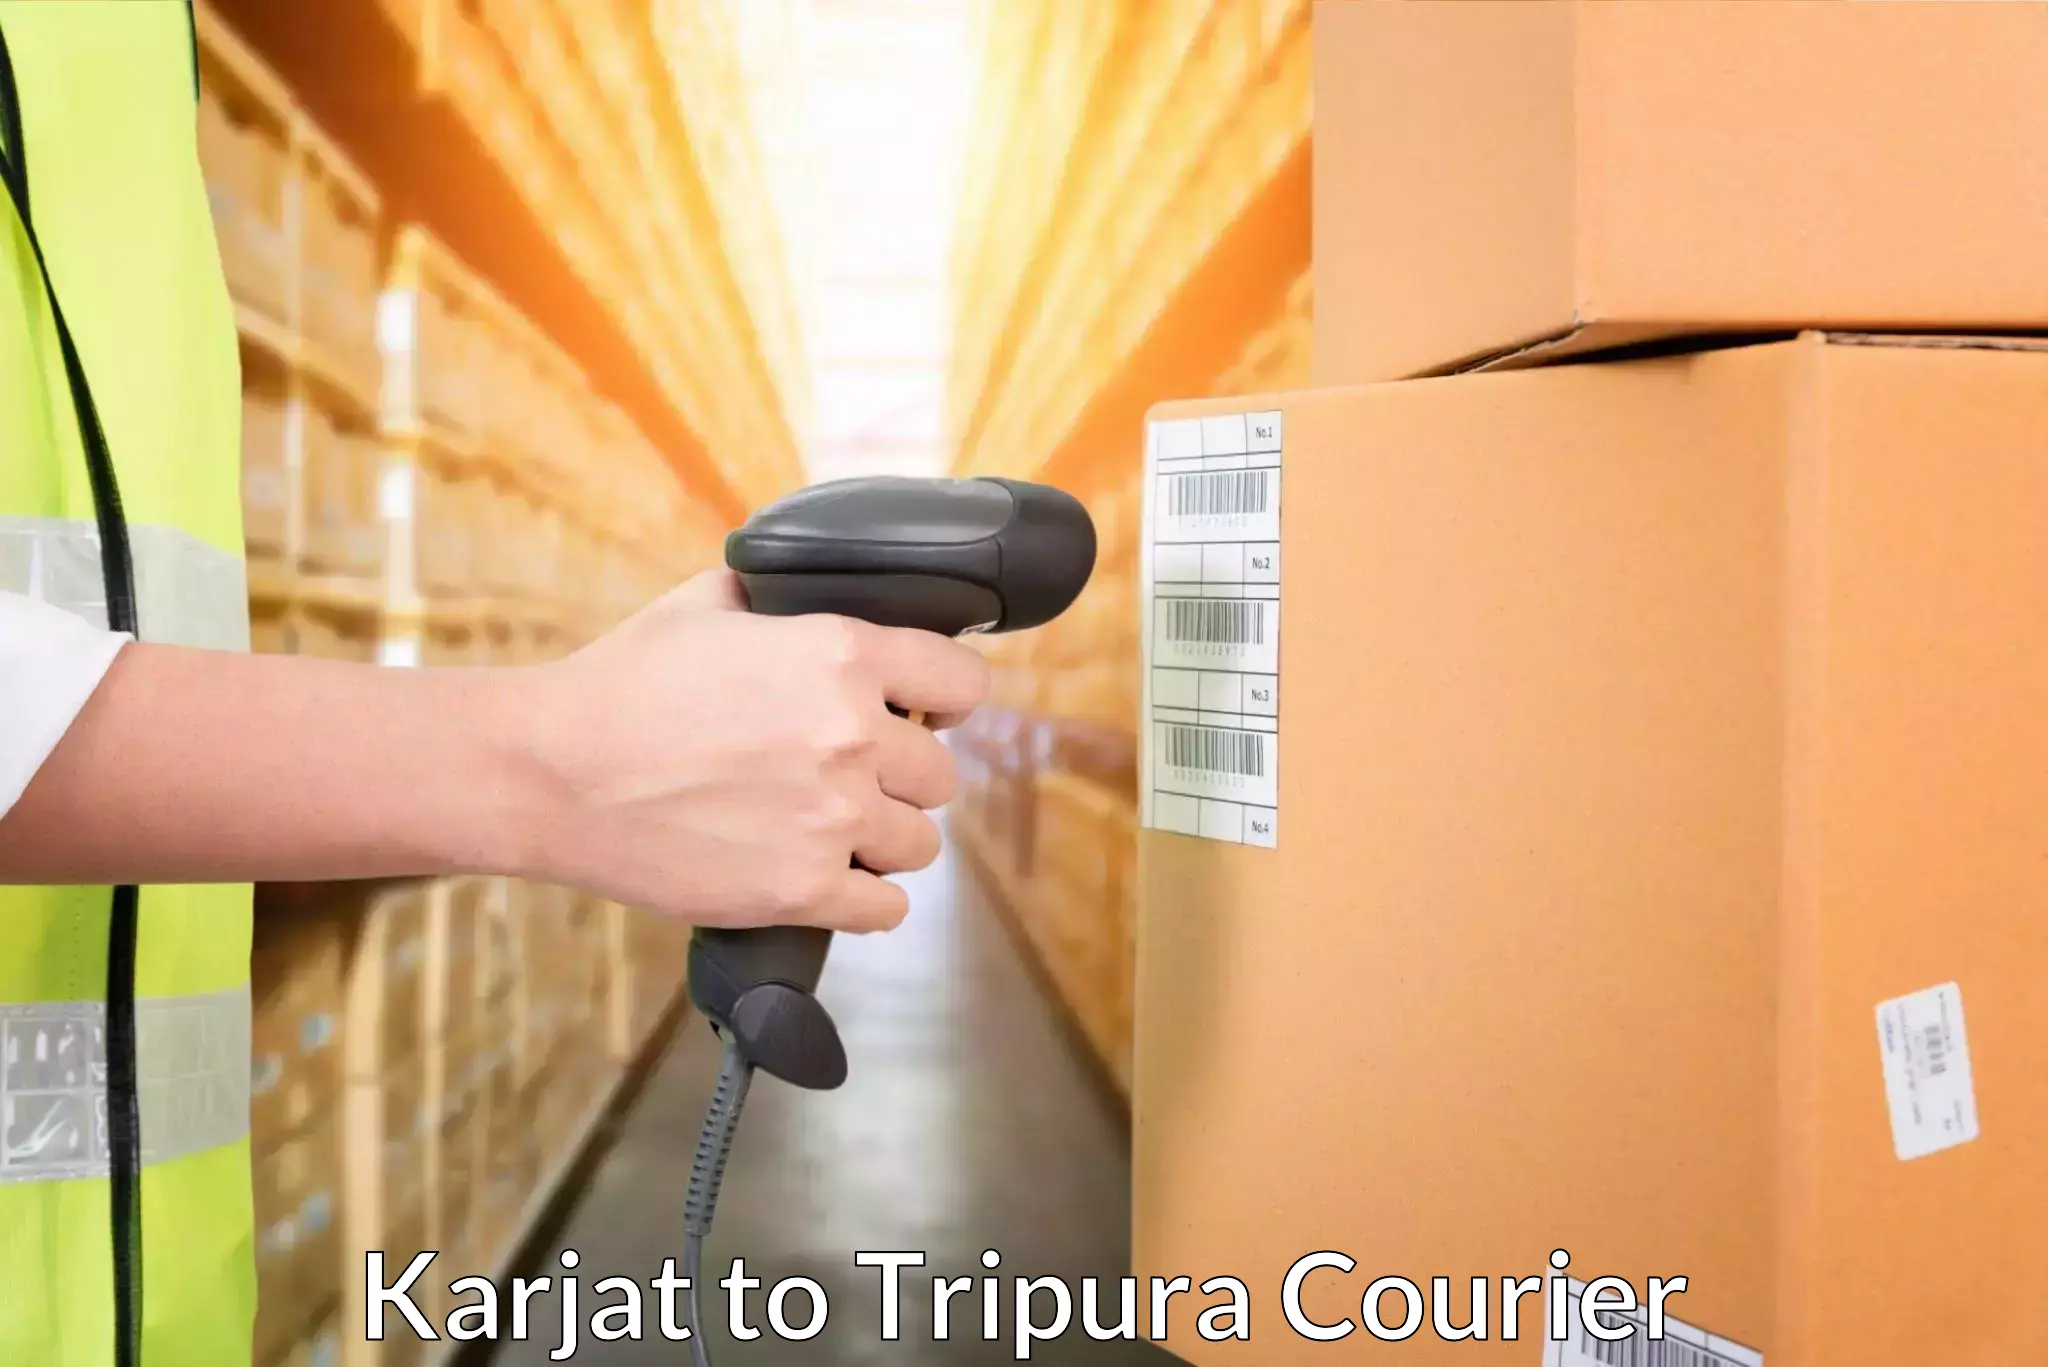 Global logistics network Karjat to Udaipur Tripura